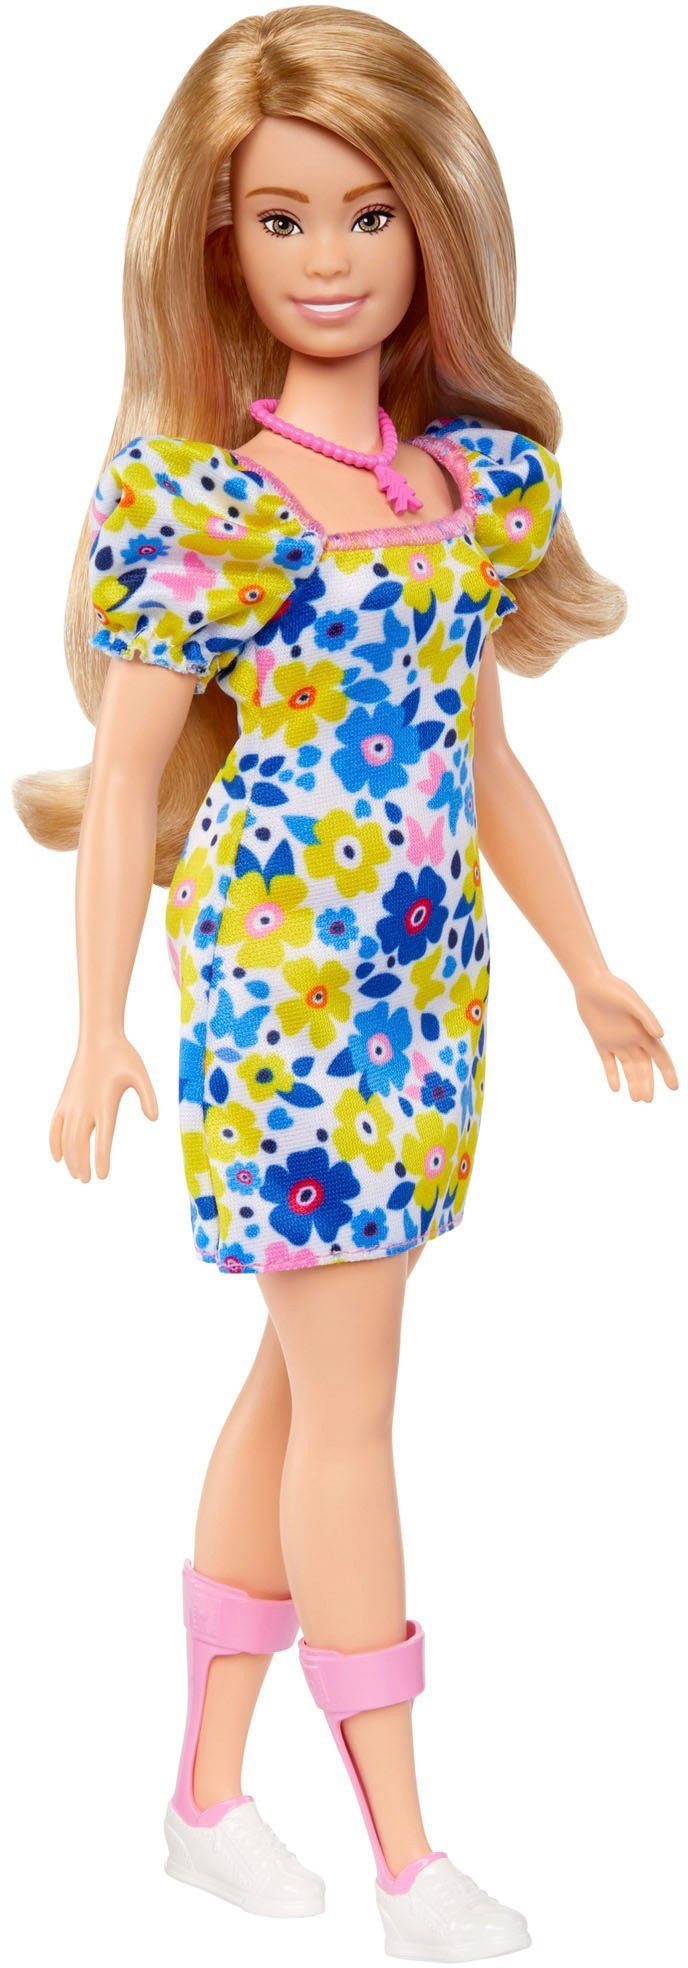 Fashionistas, Anziehpuppe Down-Syndrom Barbie